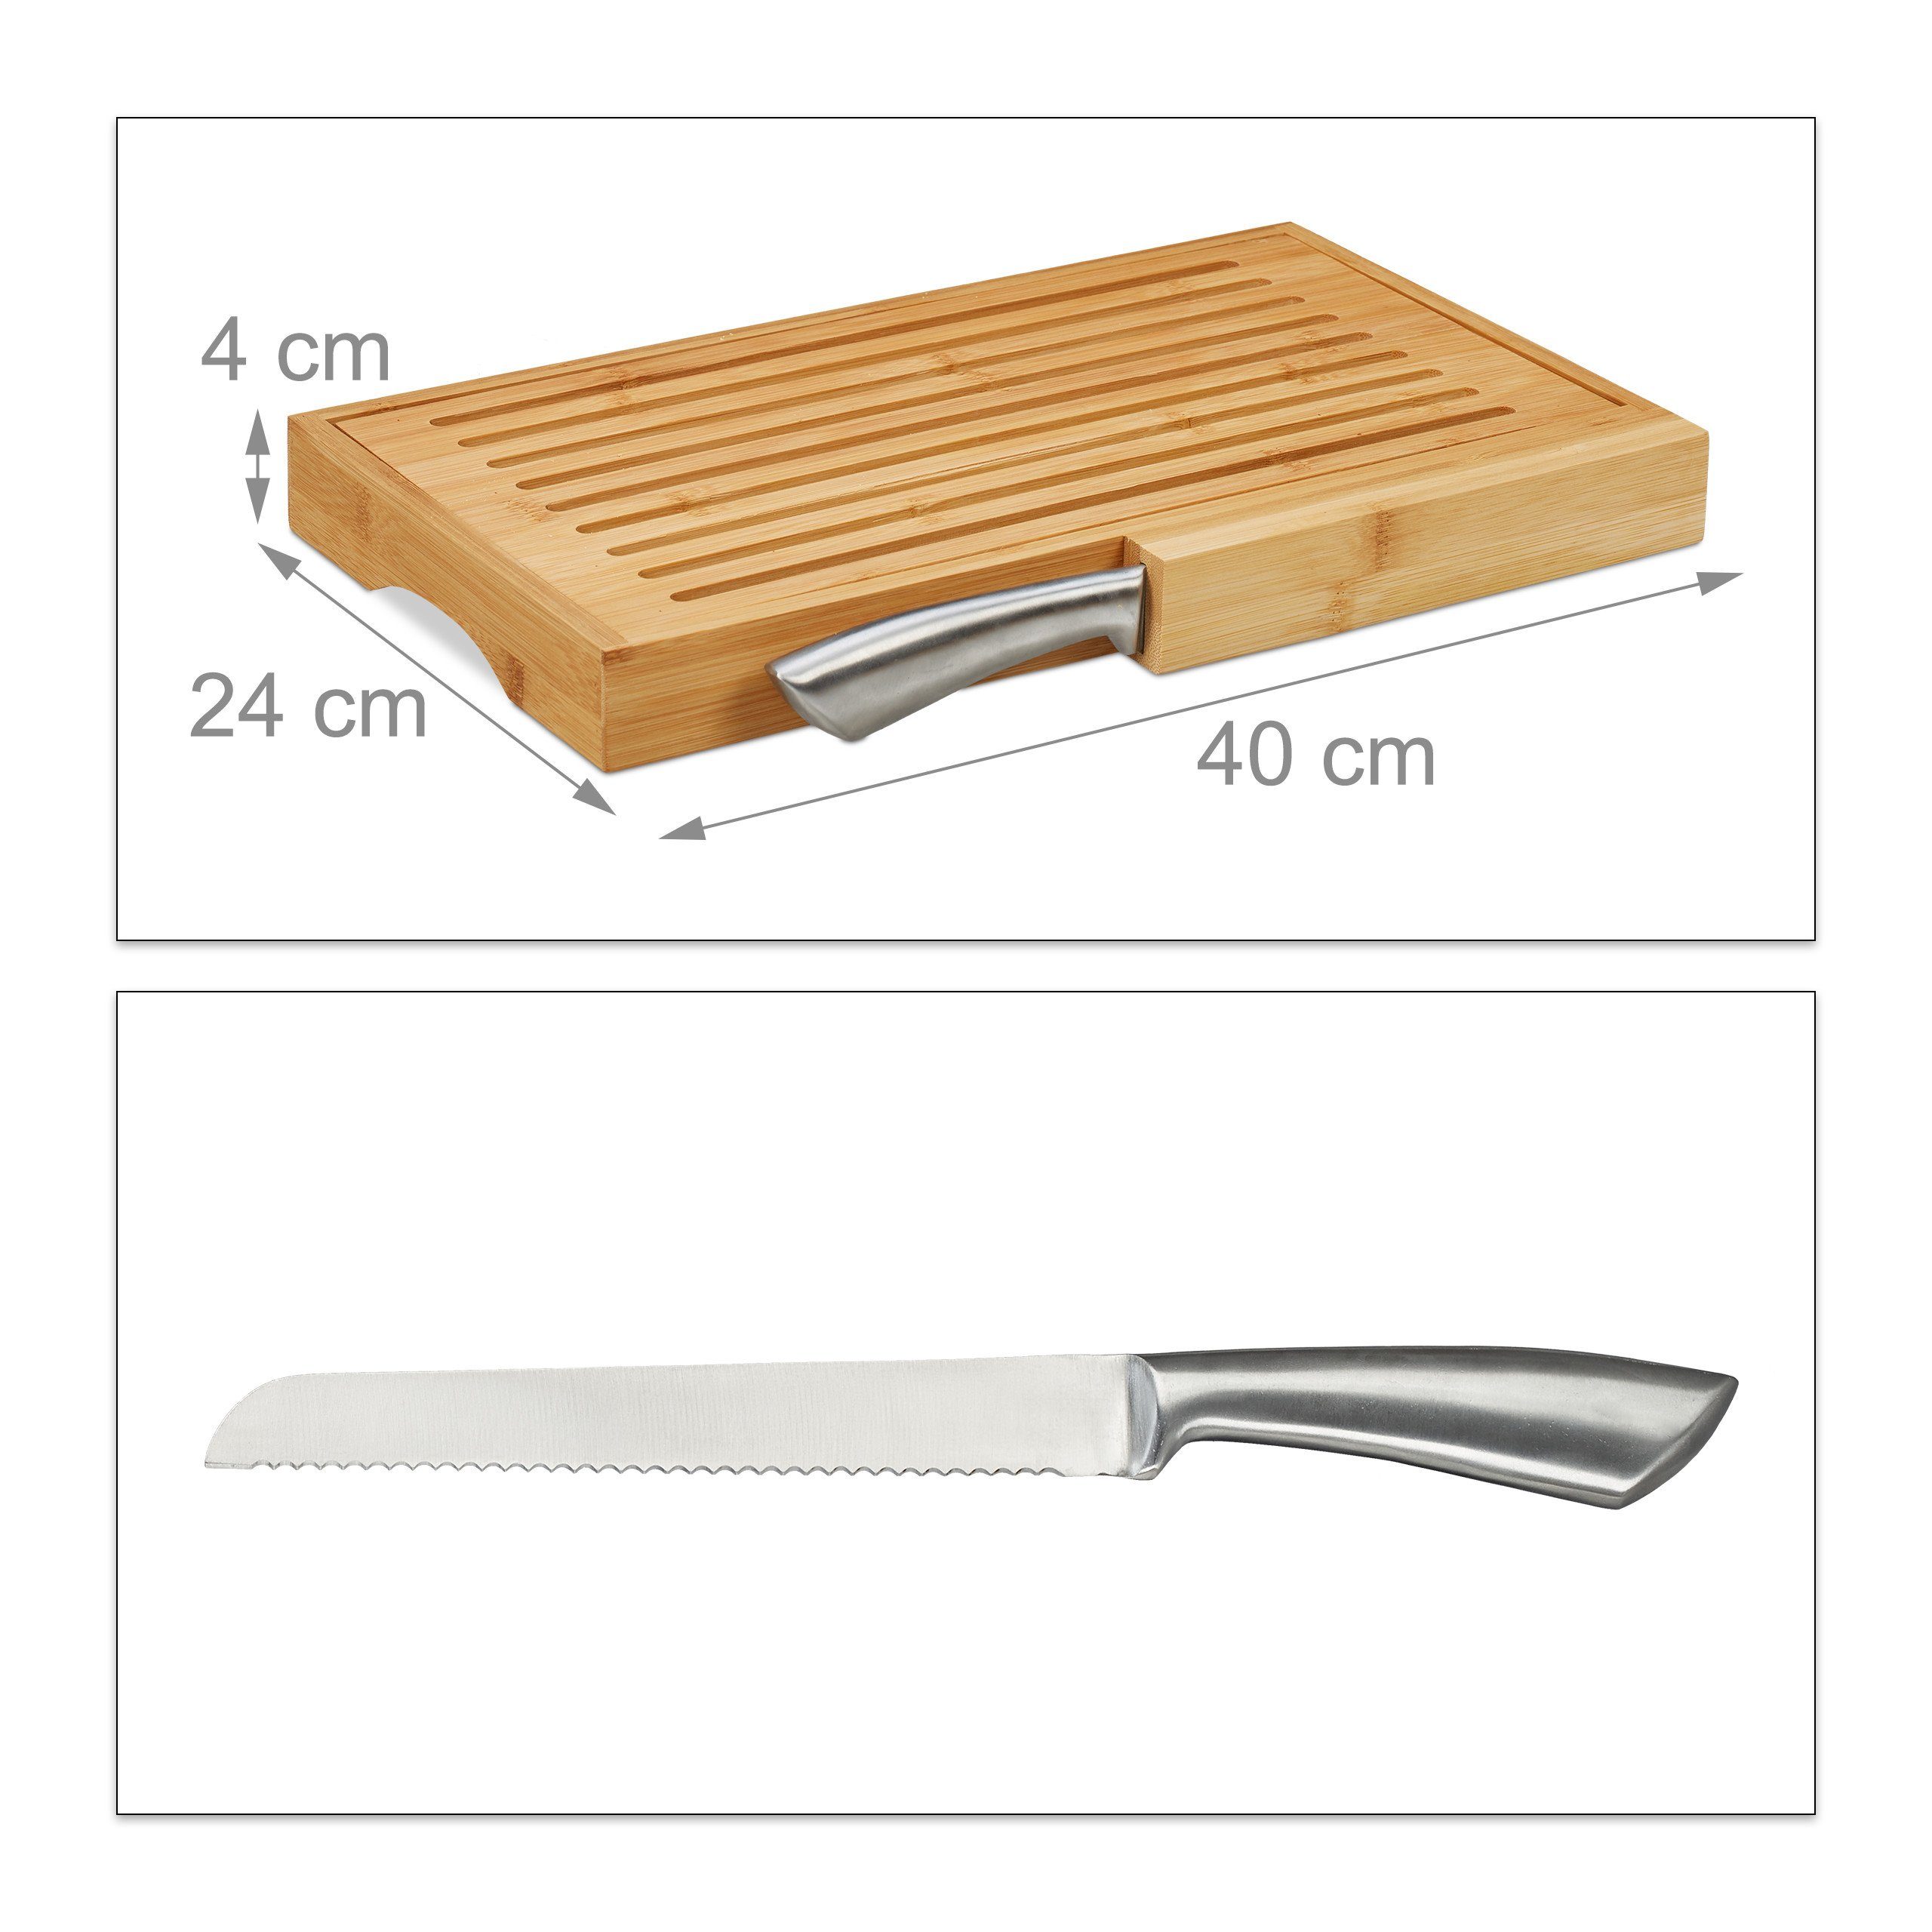 Brotschneidebrett mit relaxdays Messer, Brotschneidebrett Bambus